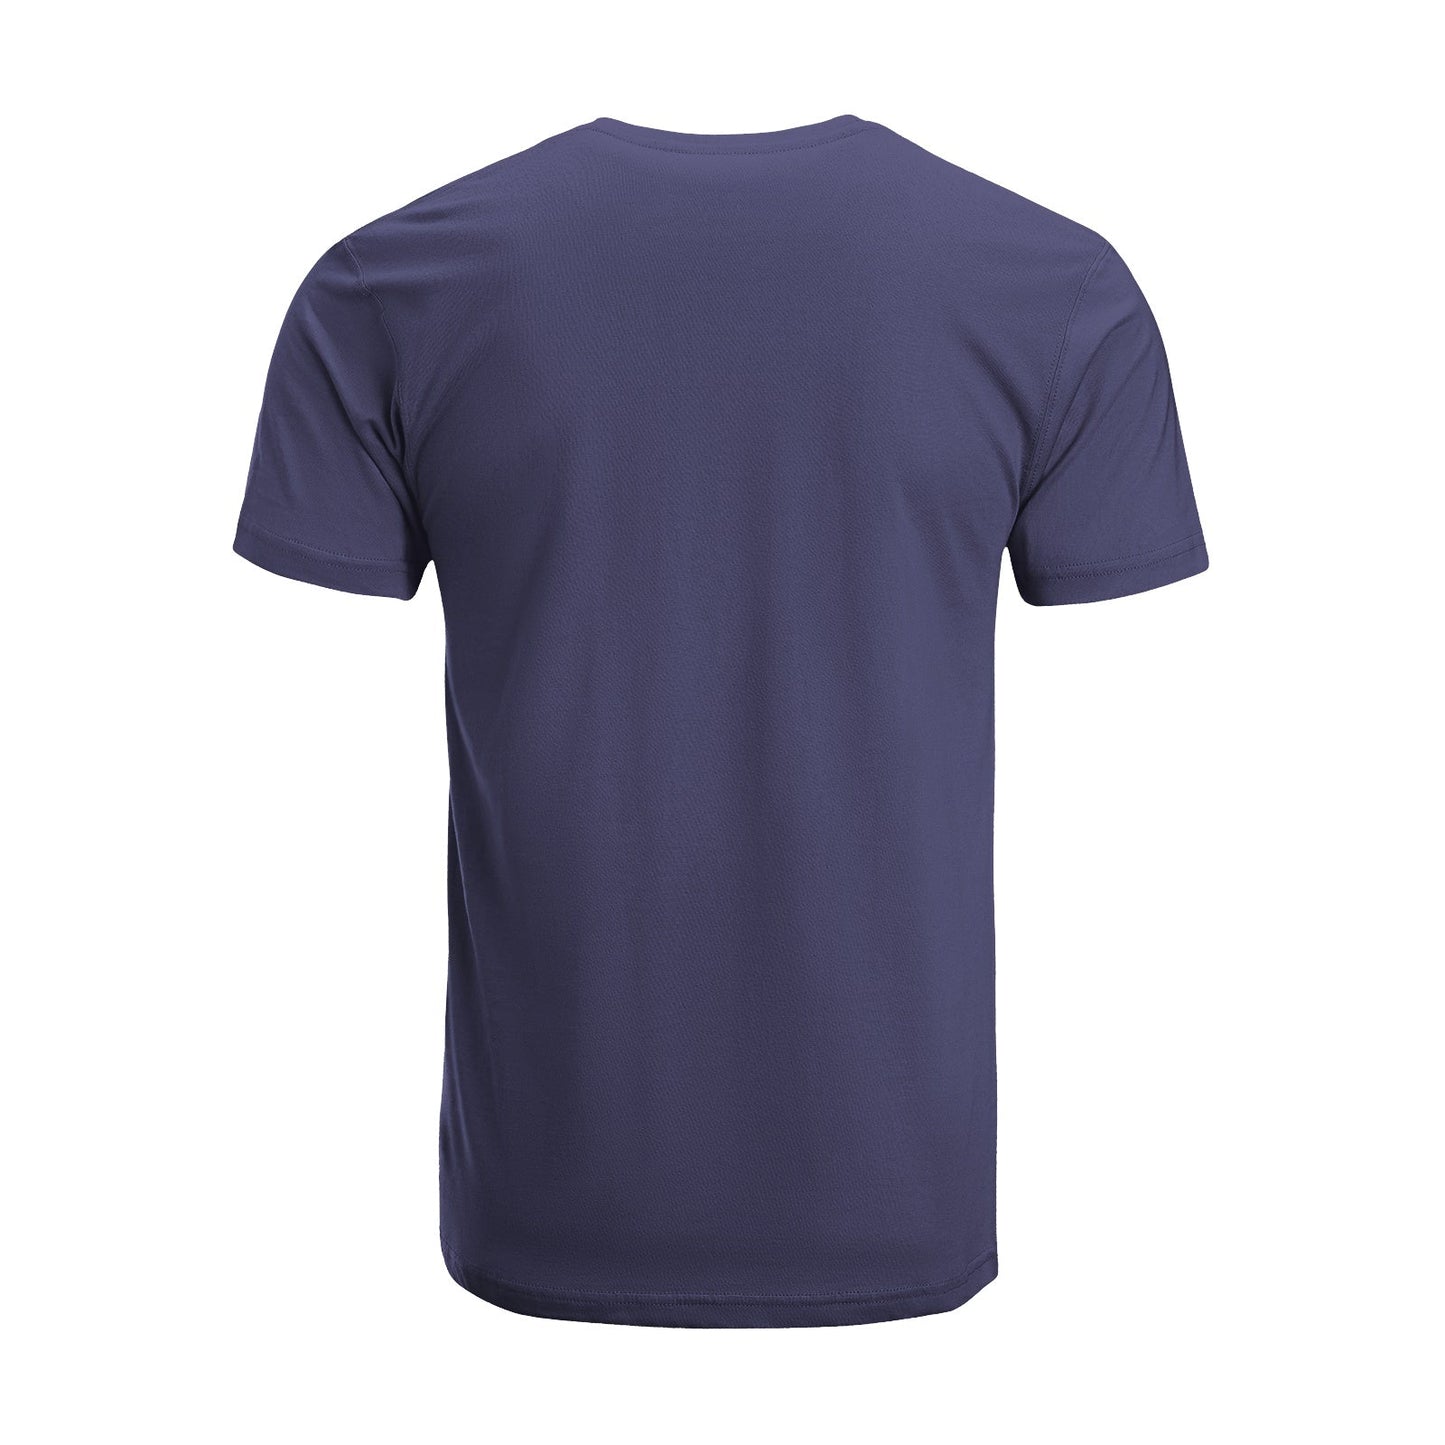 Unisex Short Sleeve Crew Neck Cotton Jersey T-Shirt USA 16